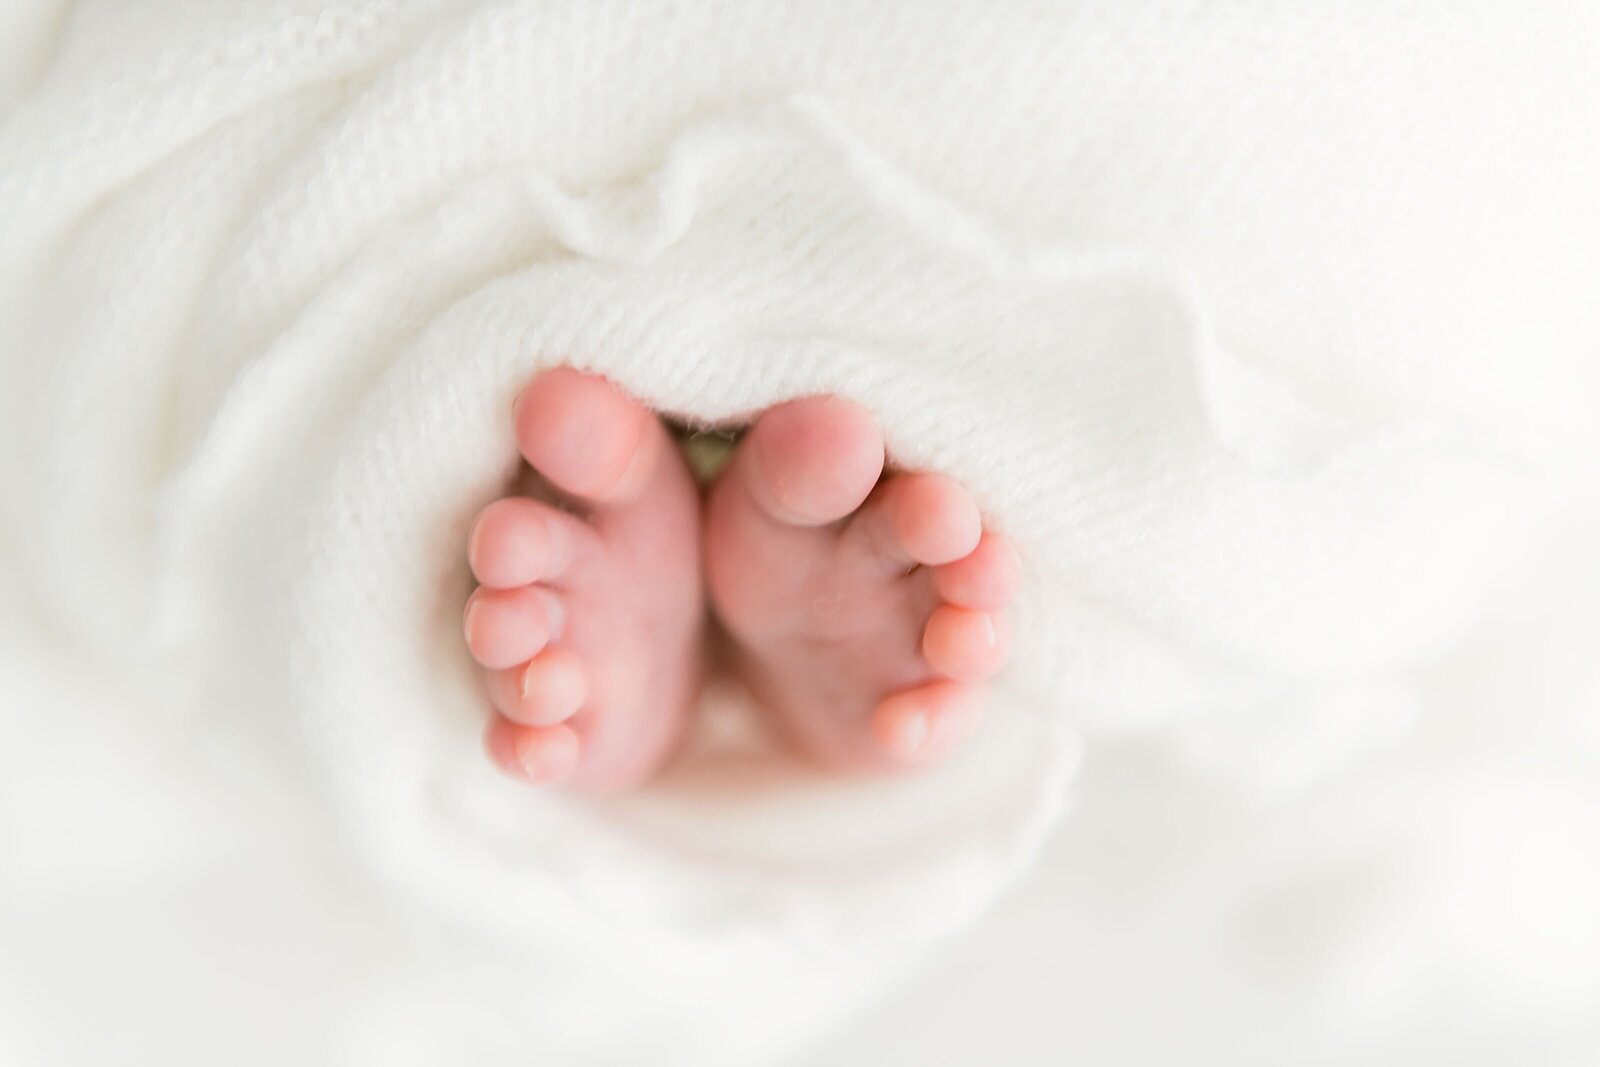 newborn foot detail shot